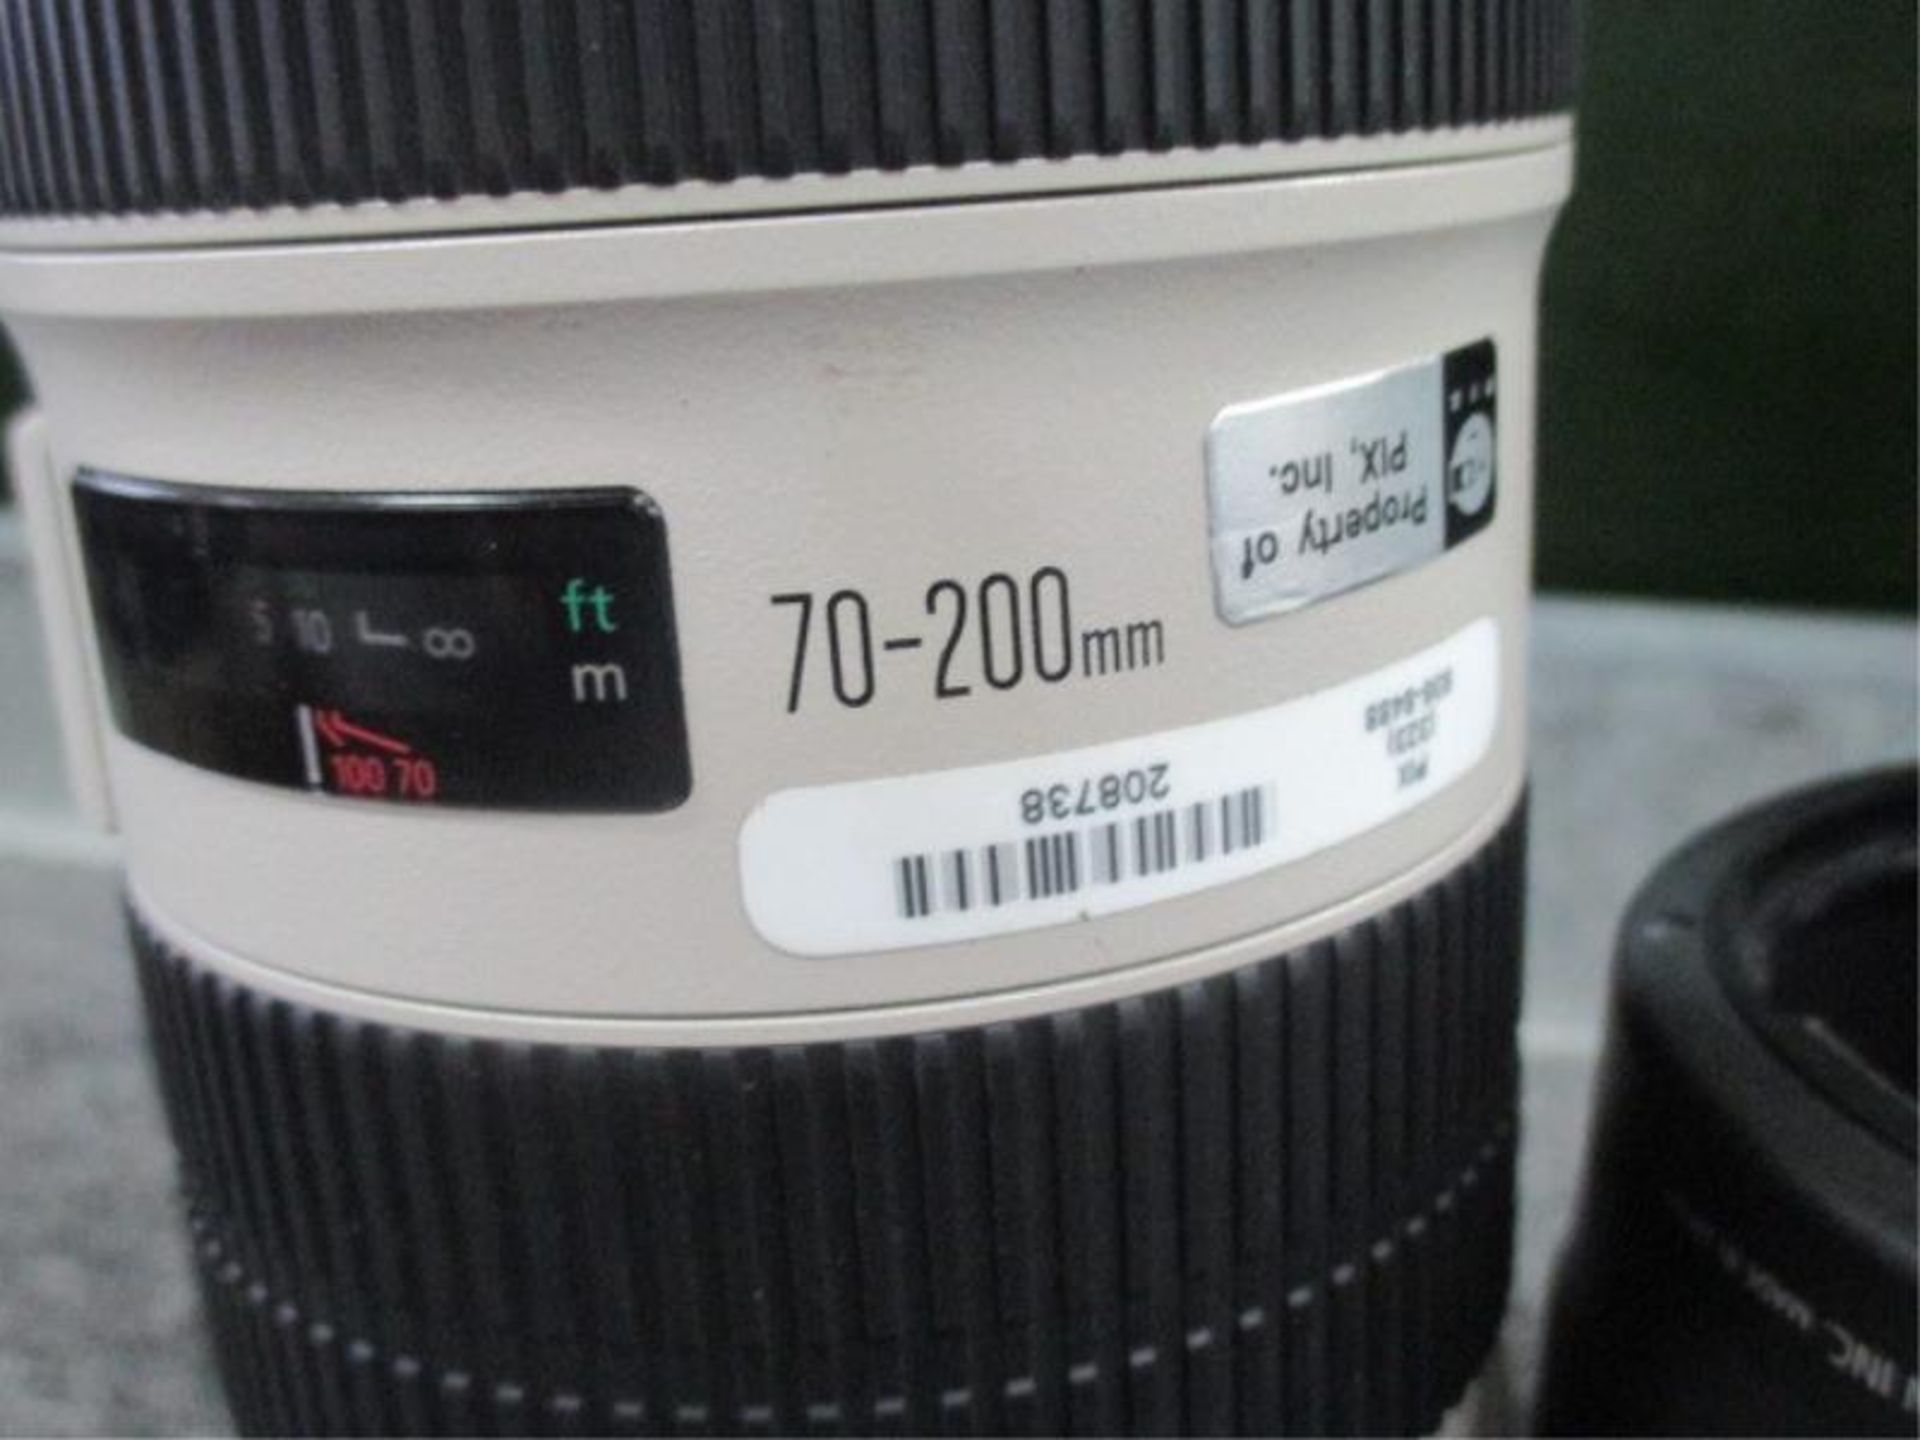 Canon EF 70-200 f/.2.8L IS USM Zoom Lens - Image 2 of 3